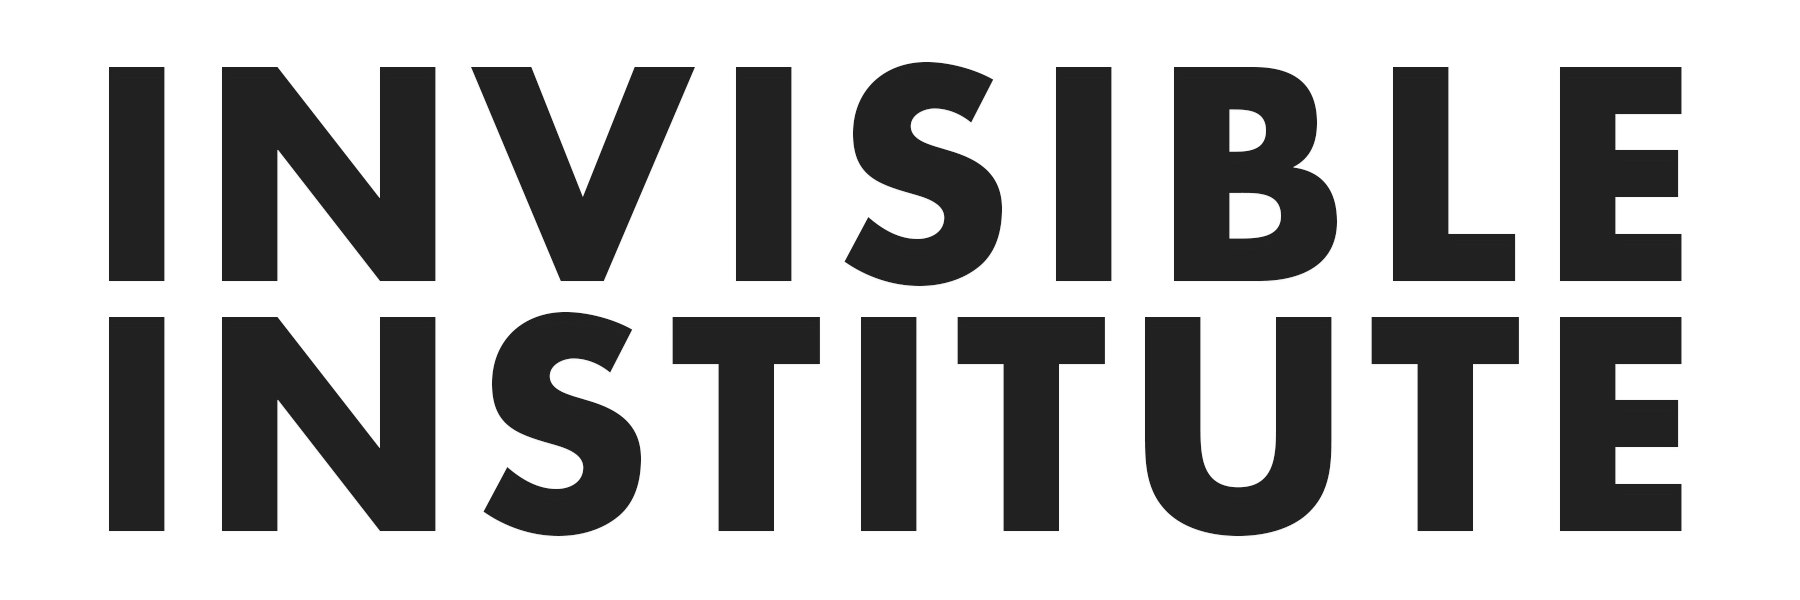 Invisible Institute logomark.png